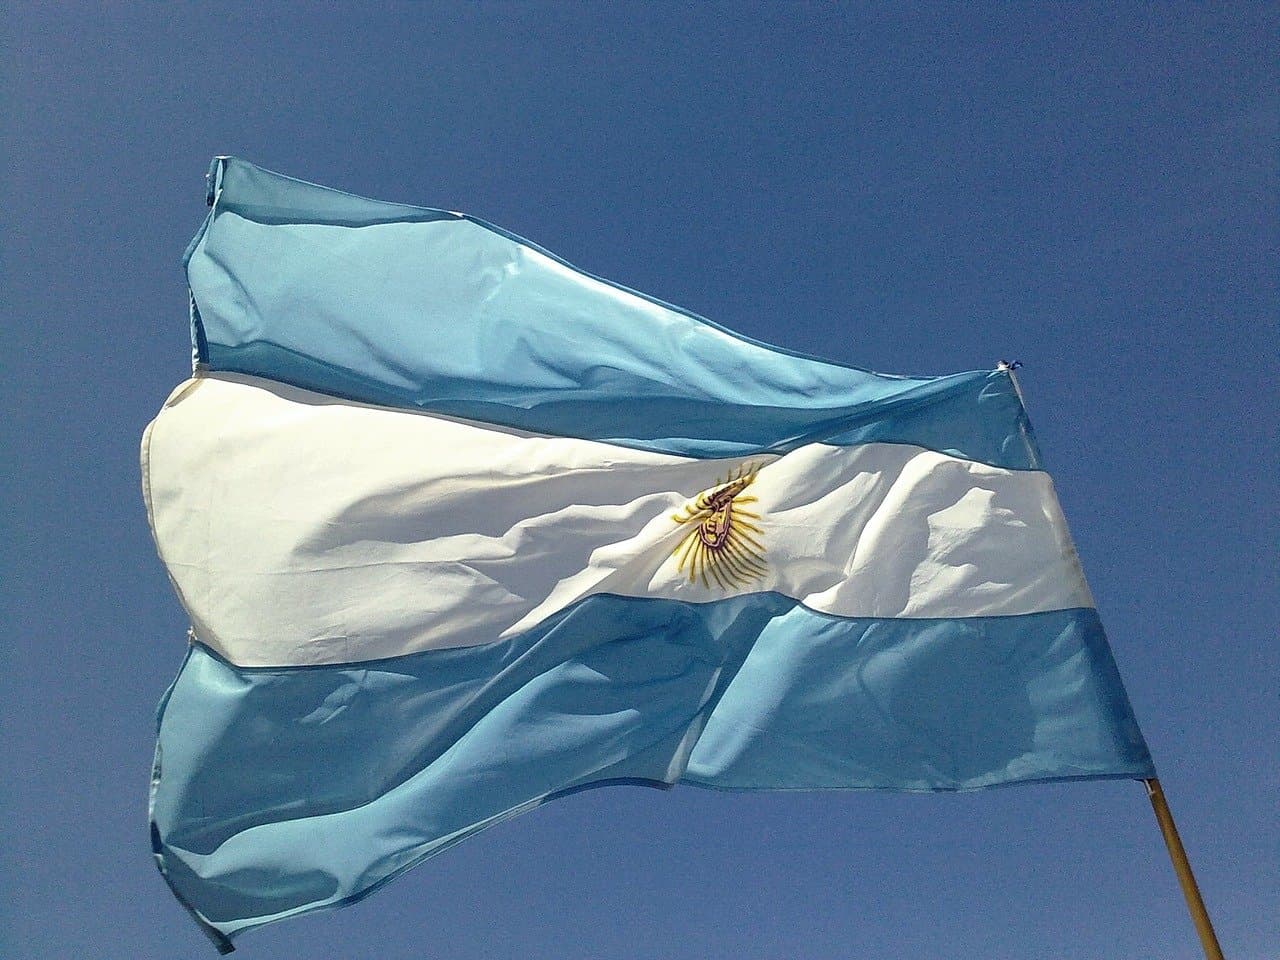 FMI ARGENTINA